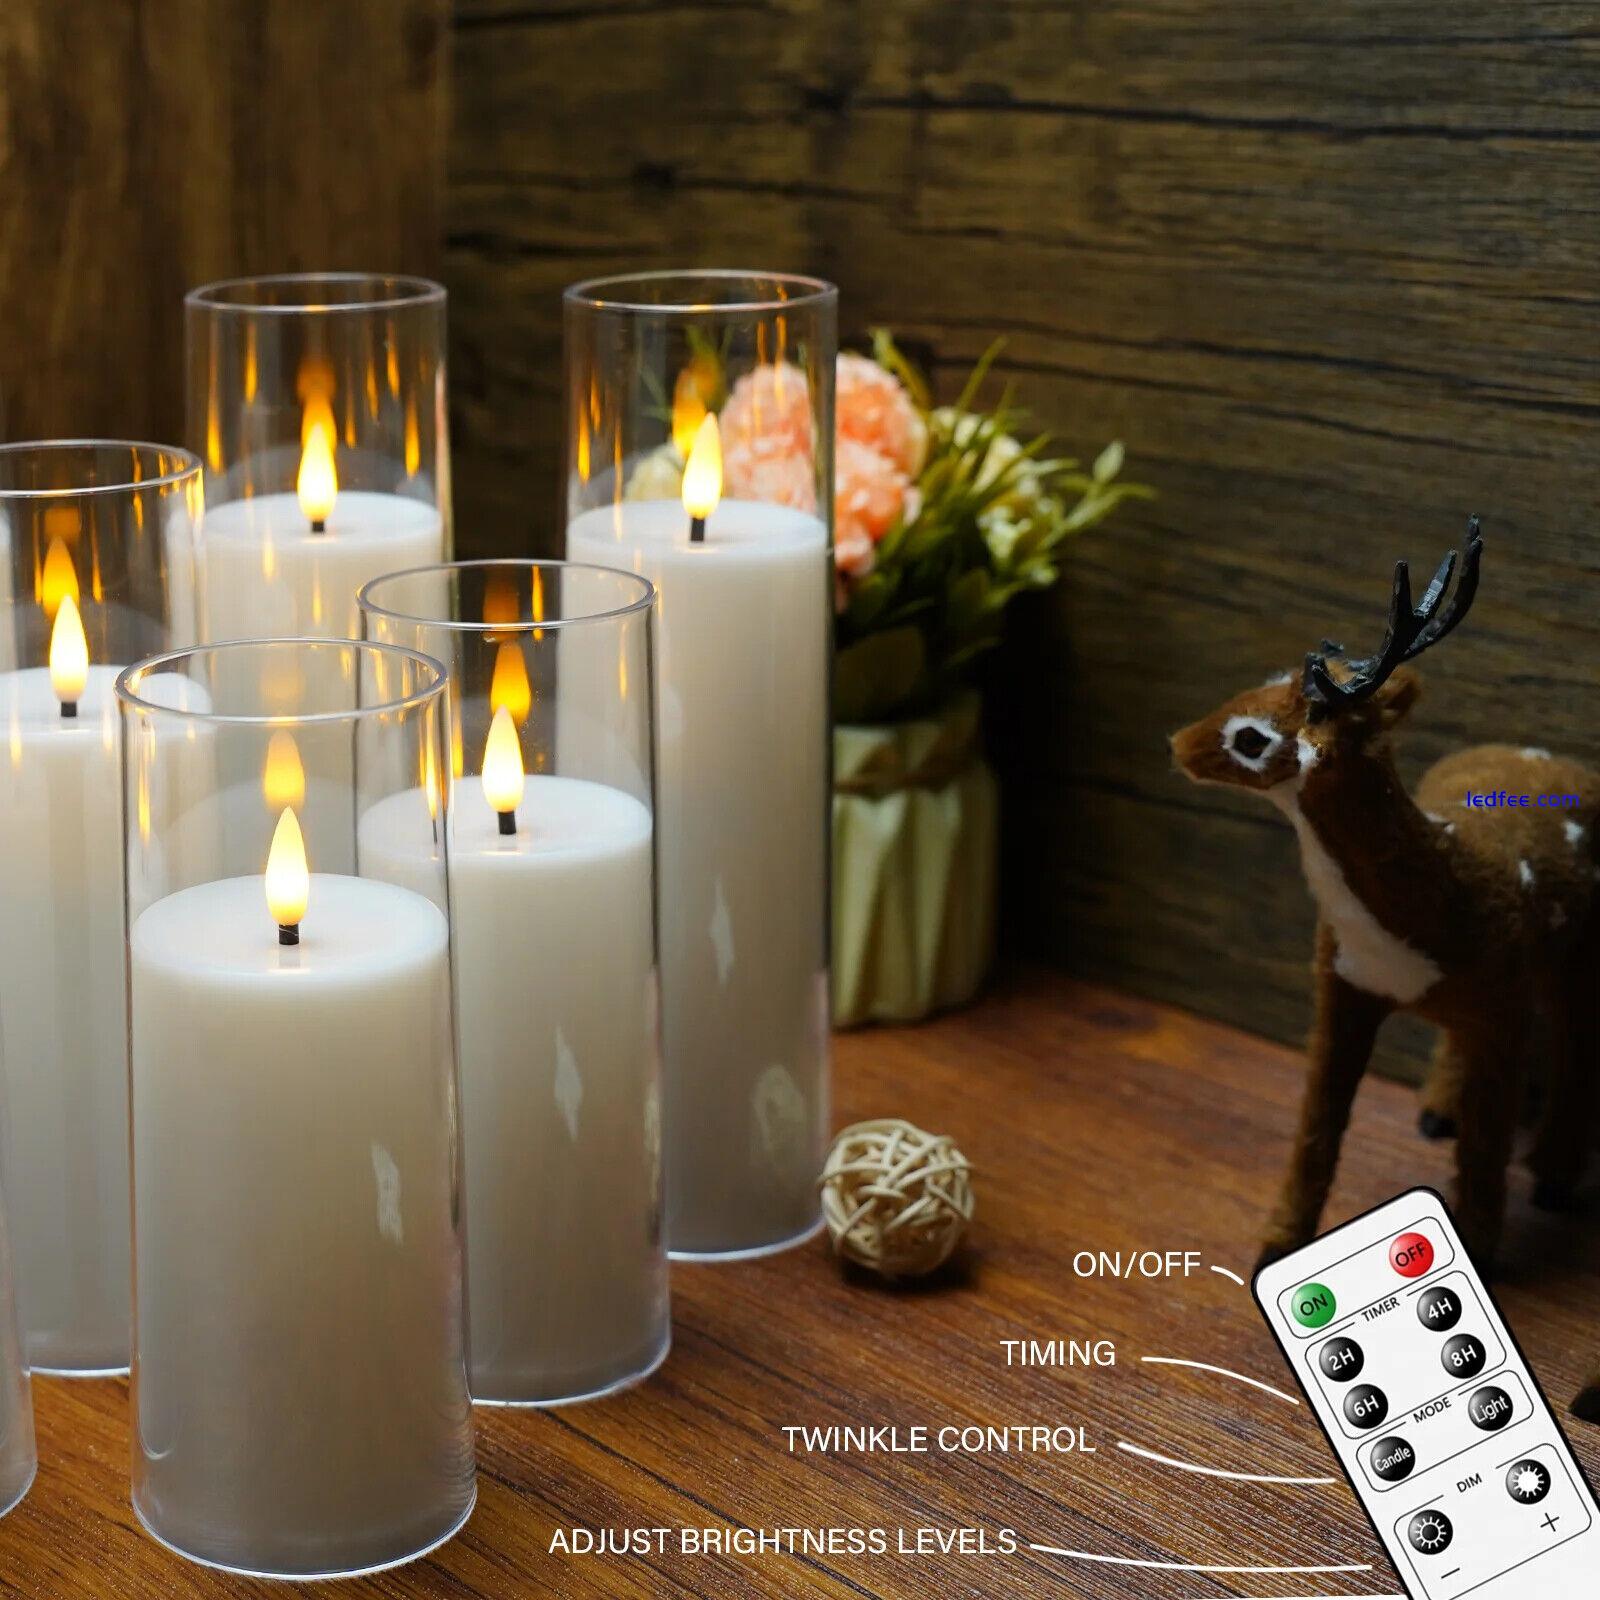   9pcs LED flameless candle lights simulate romantic wedding candles 1 